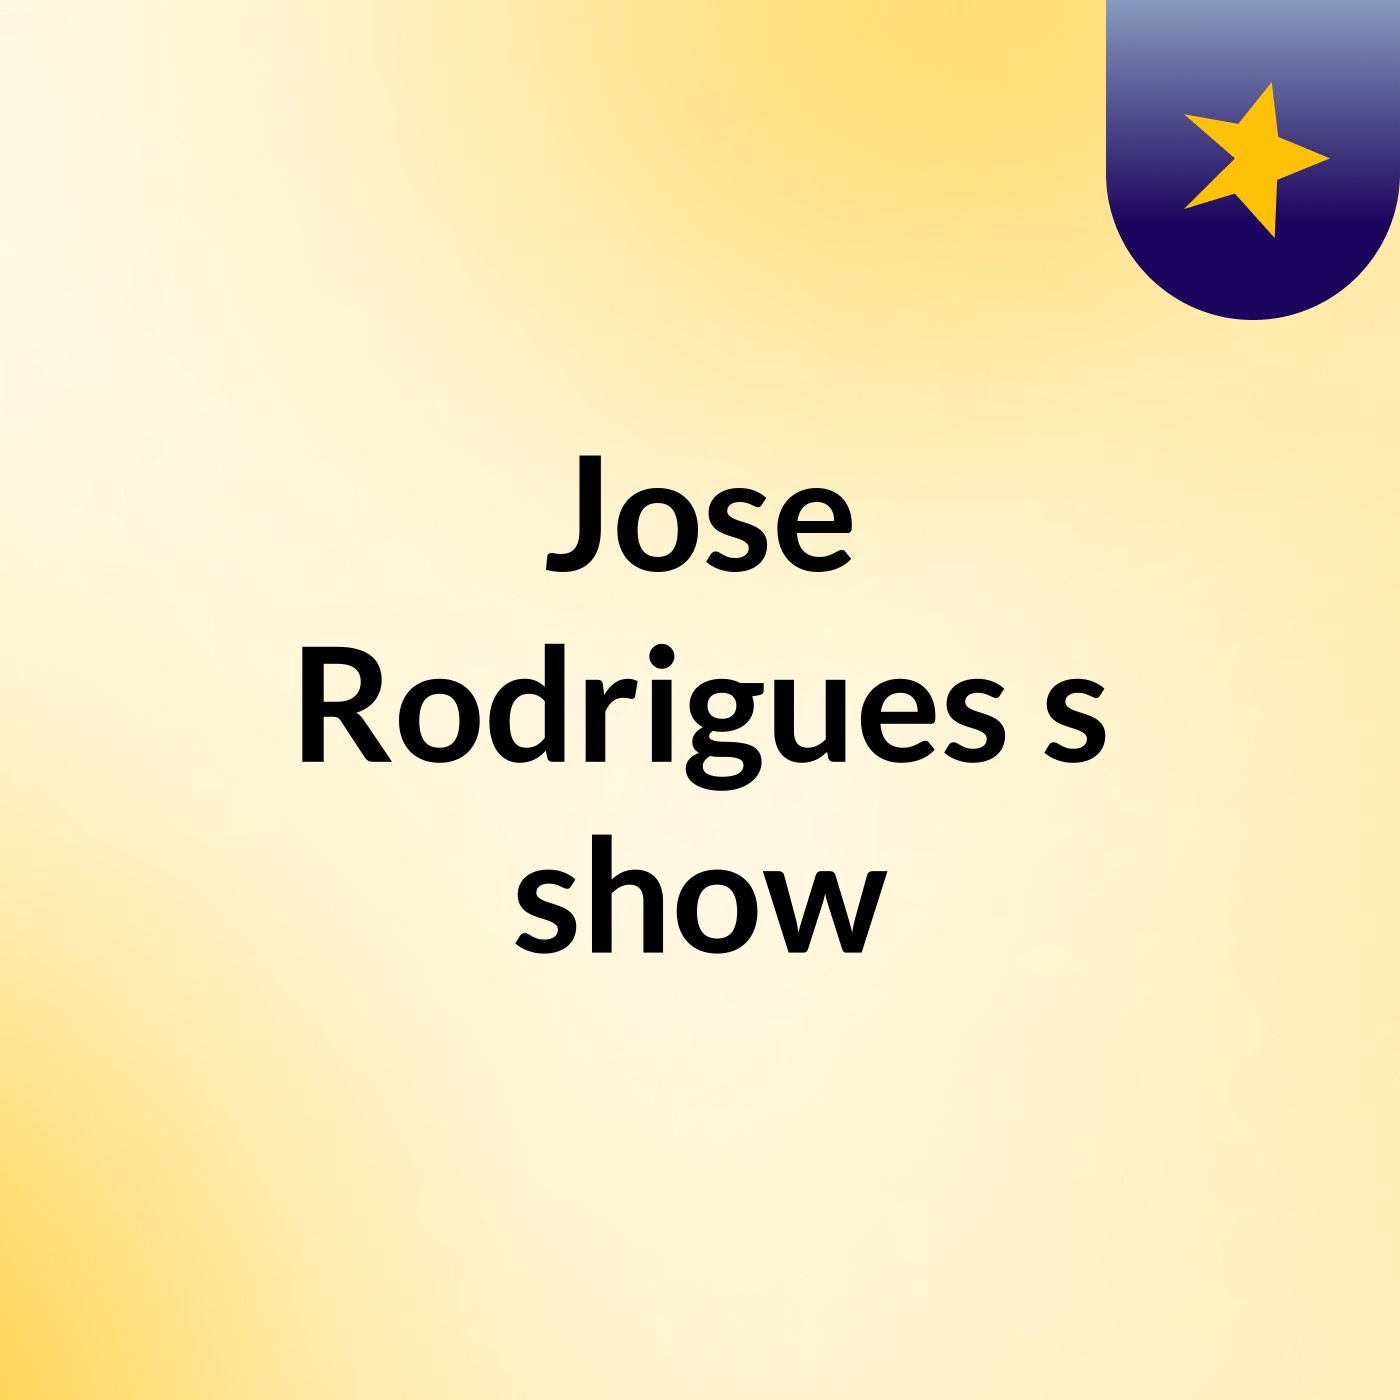 Jose Rodrigues's show